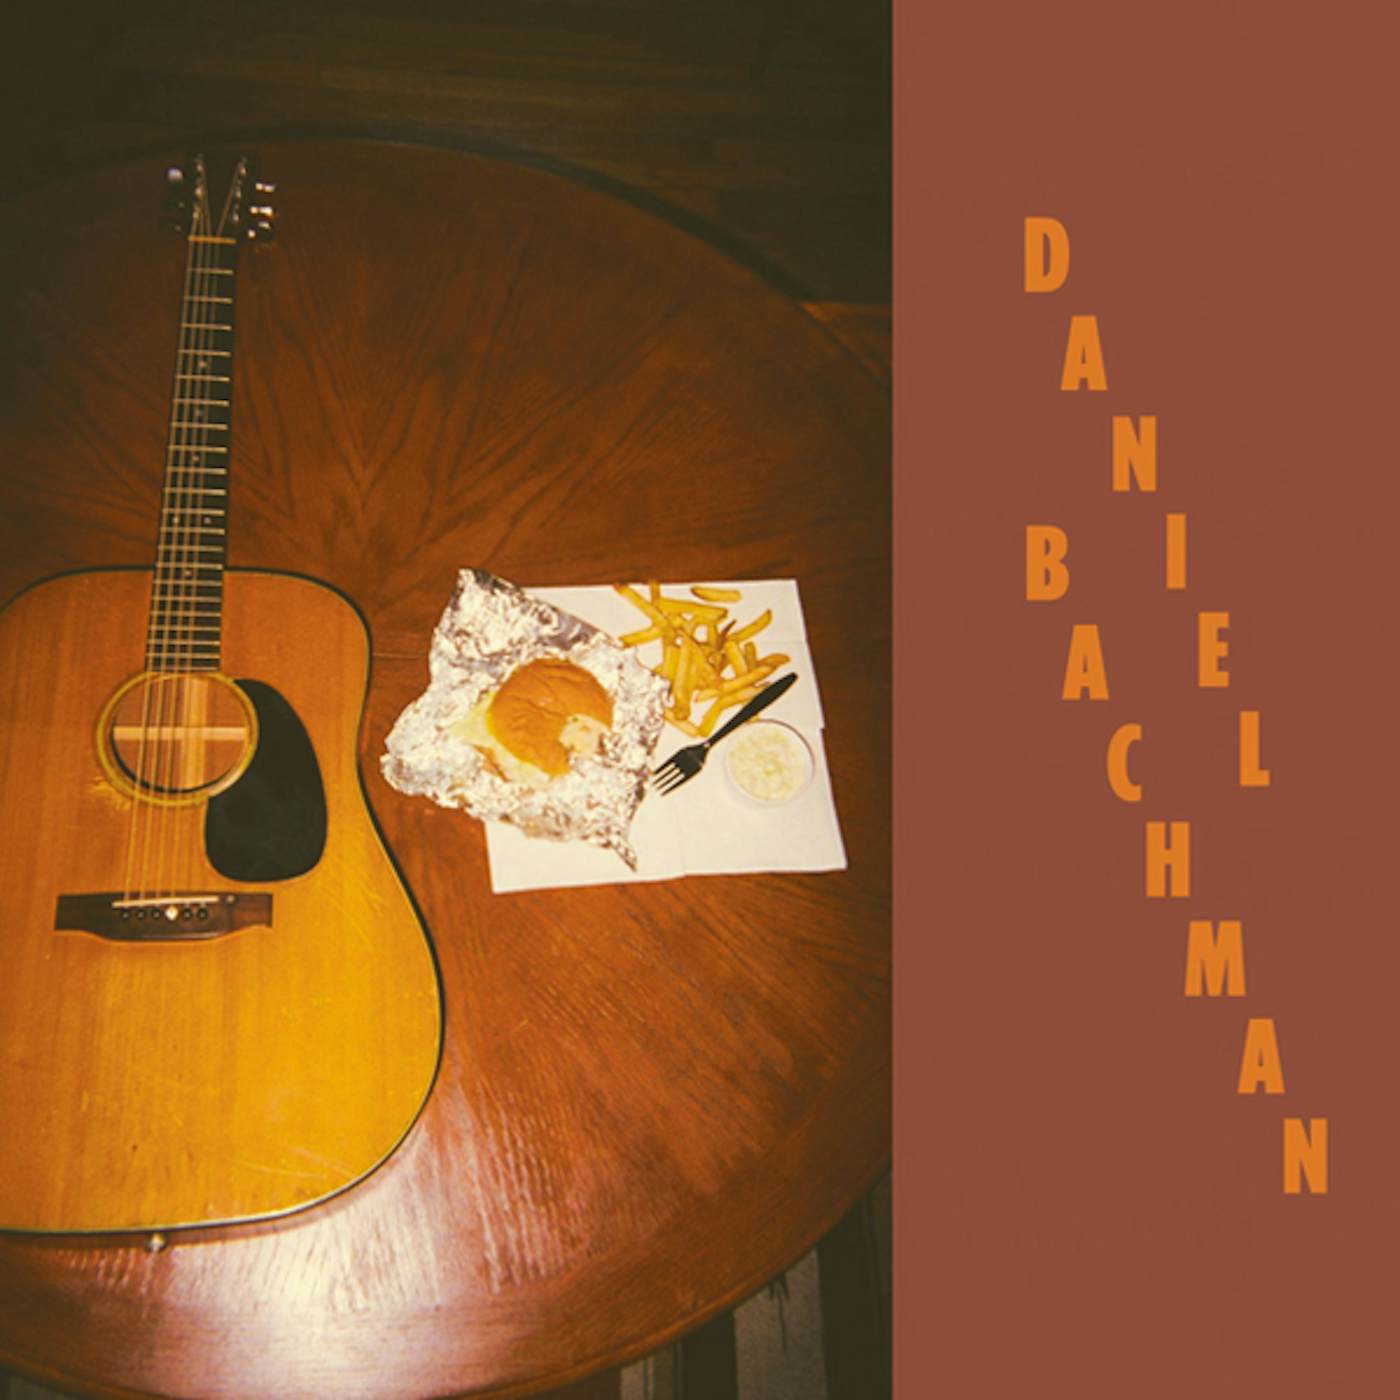 Daniel Bachman MISCELLANEOUS EPHEMERA AND OTHER BULLSHIT Vinyl Record